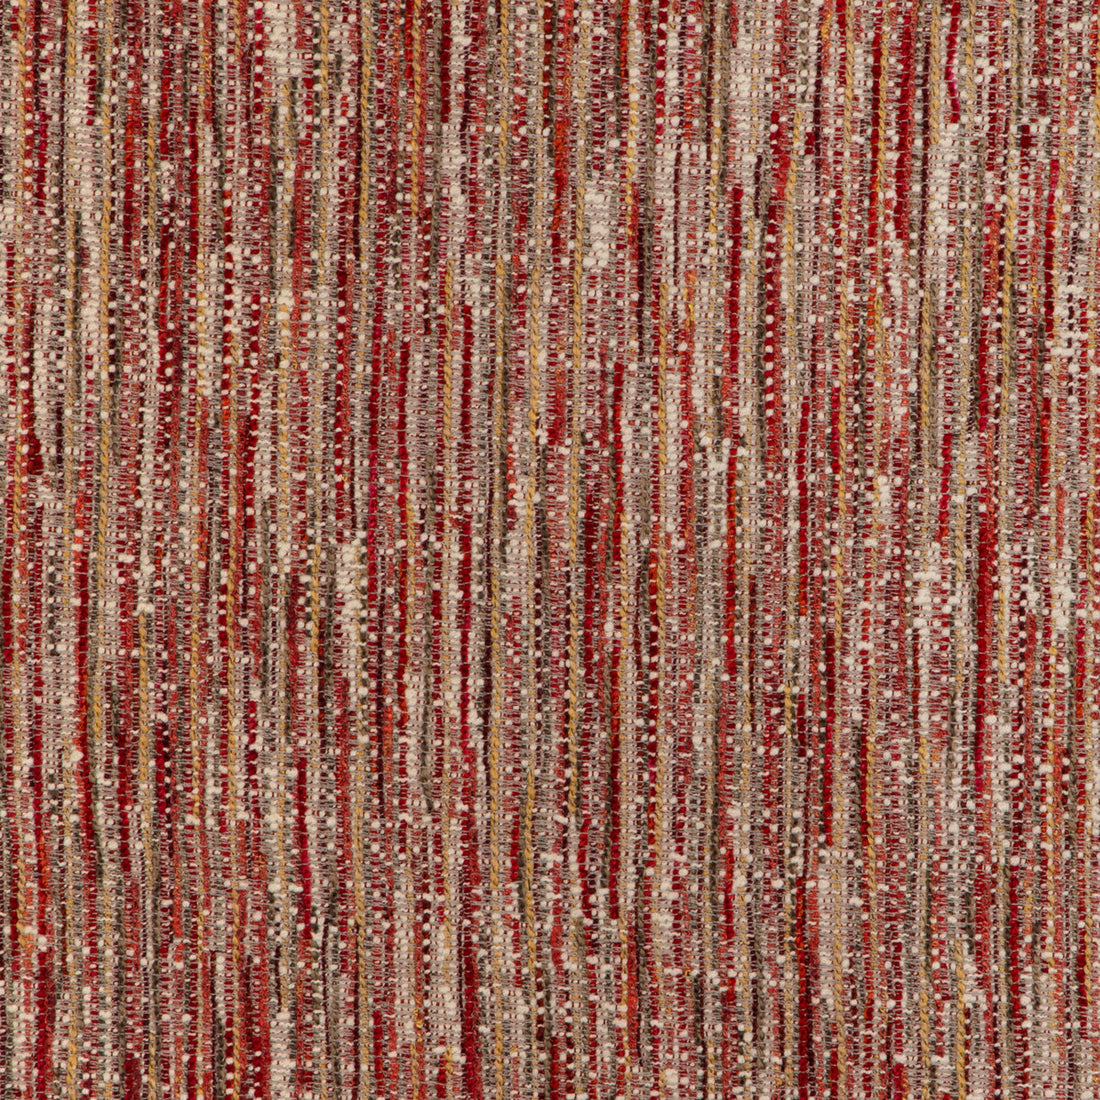 Kravet Smart fabric in 36659-24 color - pattern 36659.24.0 - by Kravet Smart in the Performance Kravetarmor collection